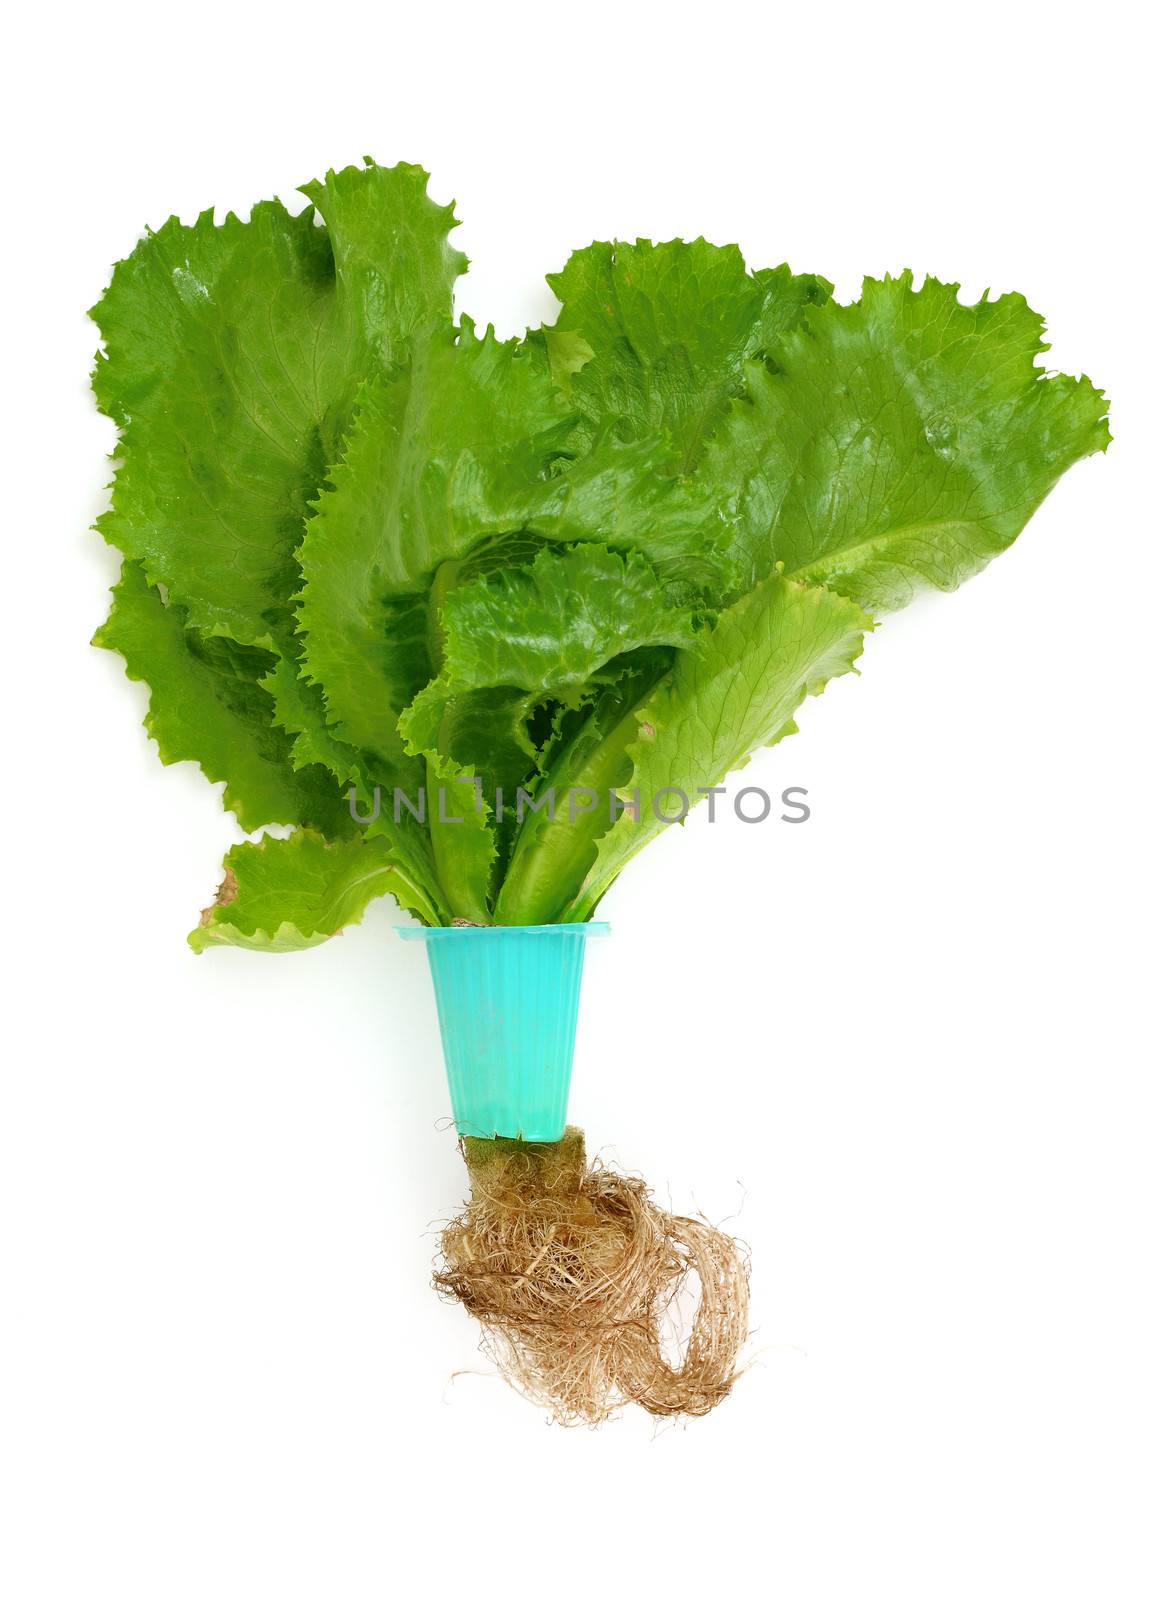 Hydroponic Lettuce by antpkr